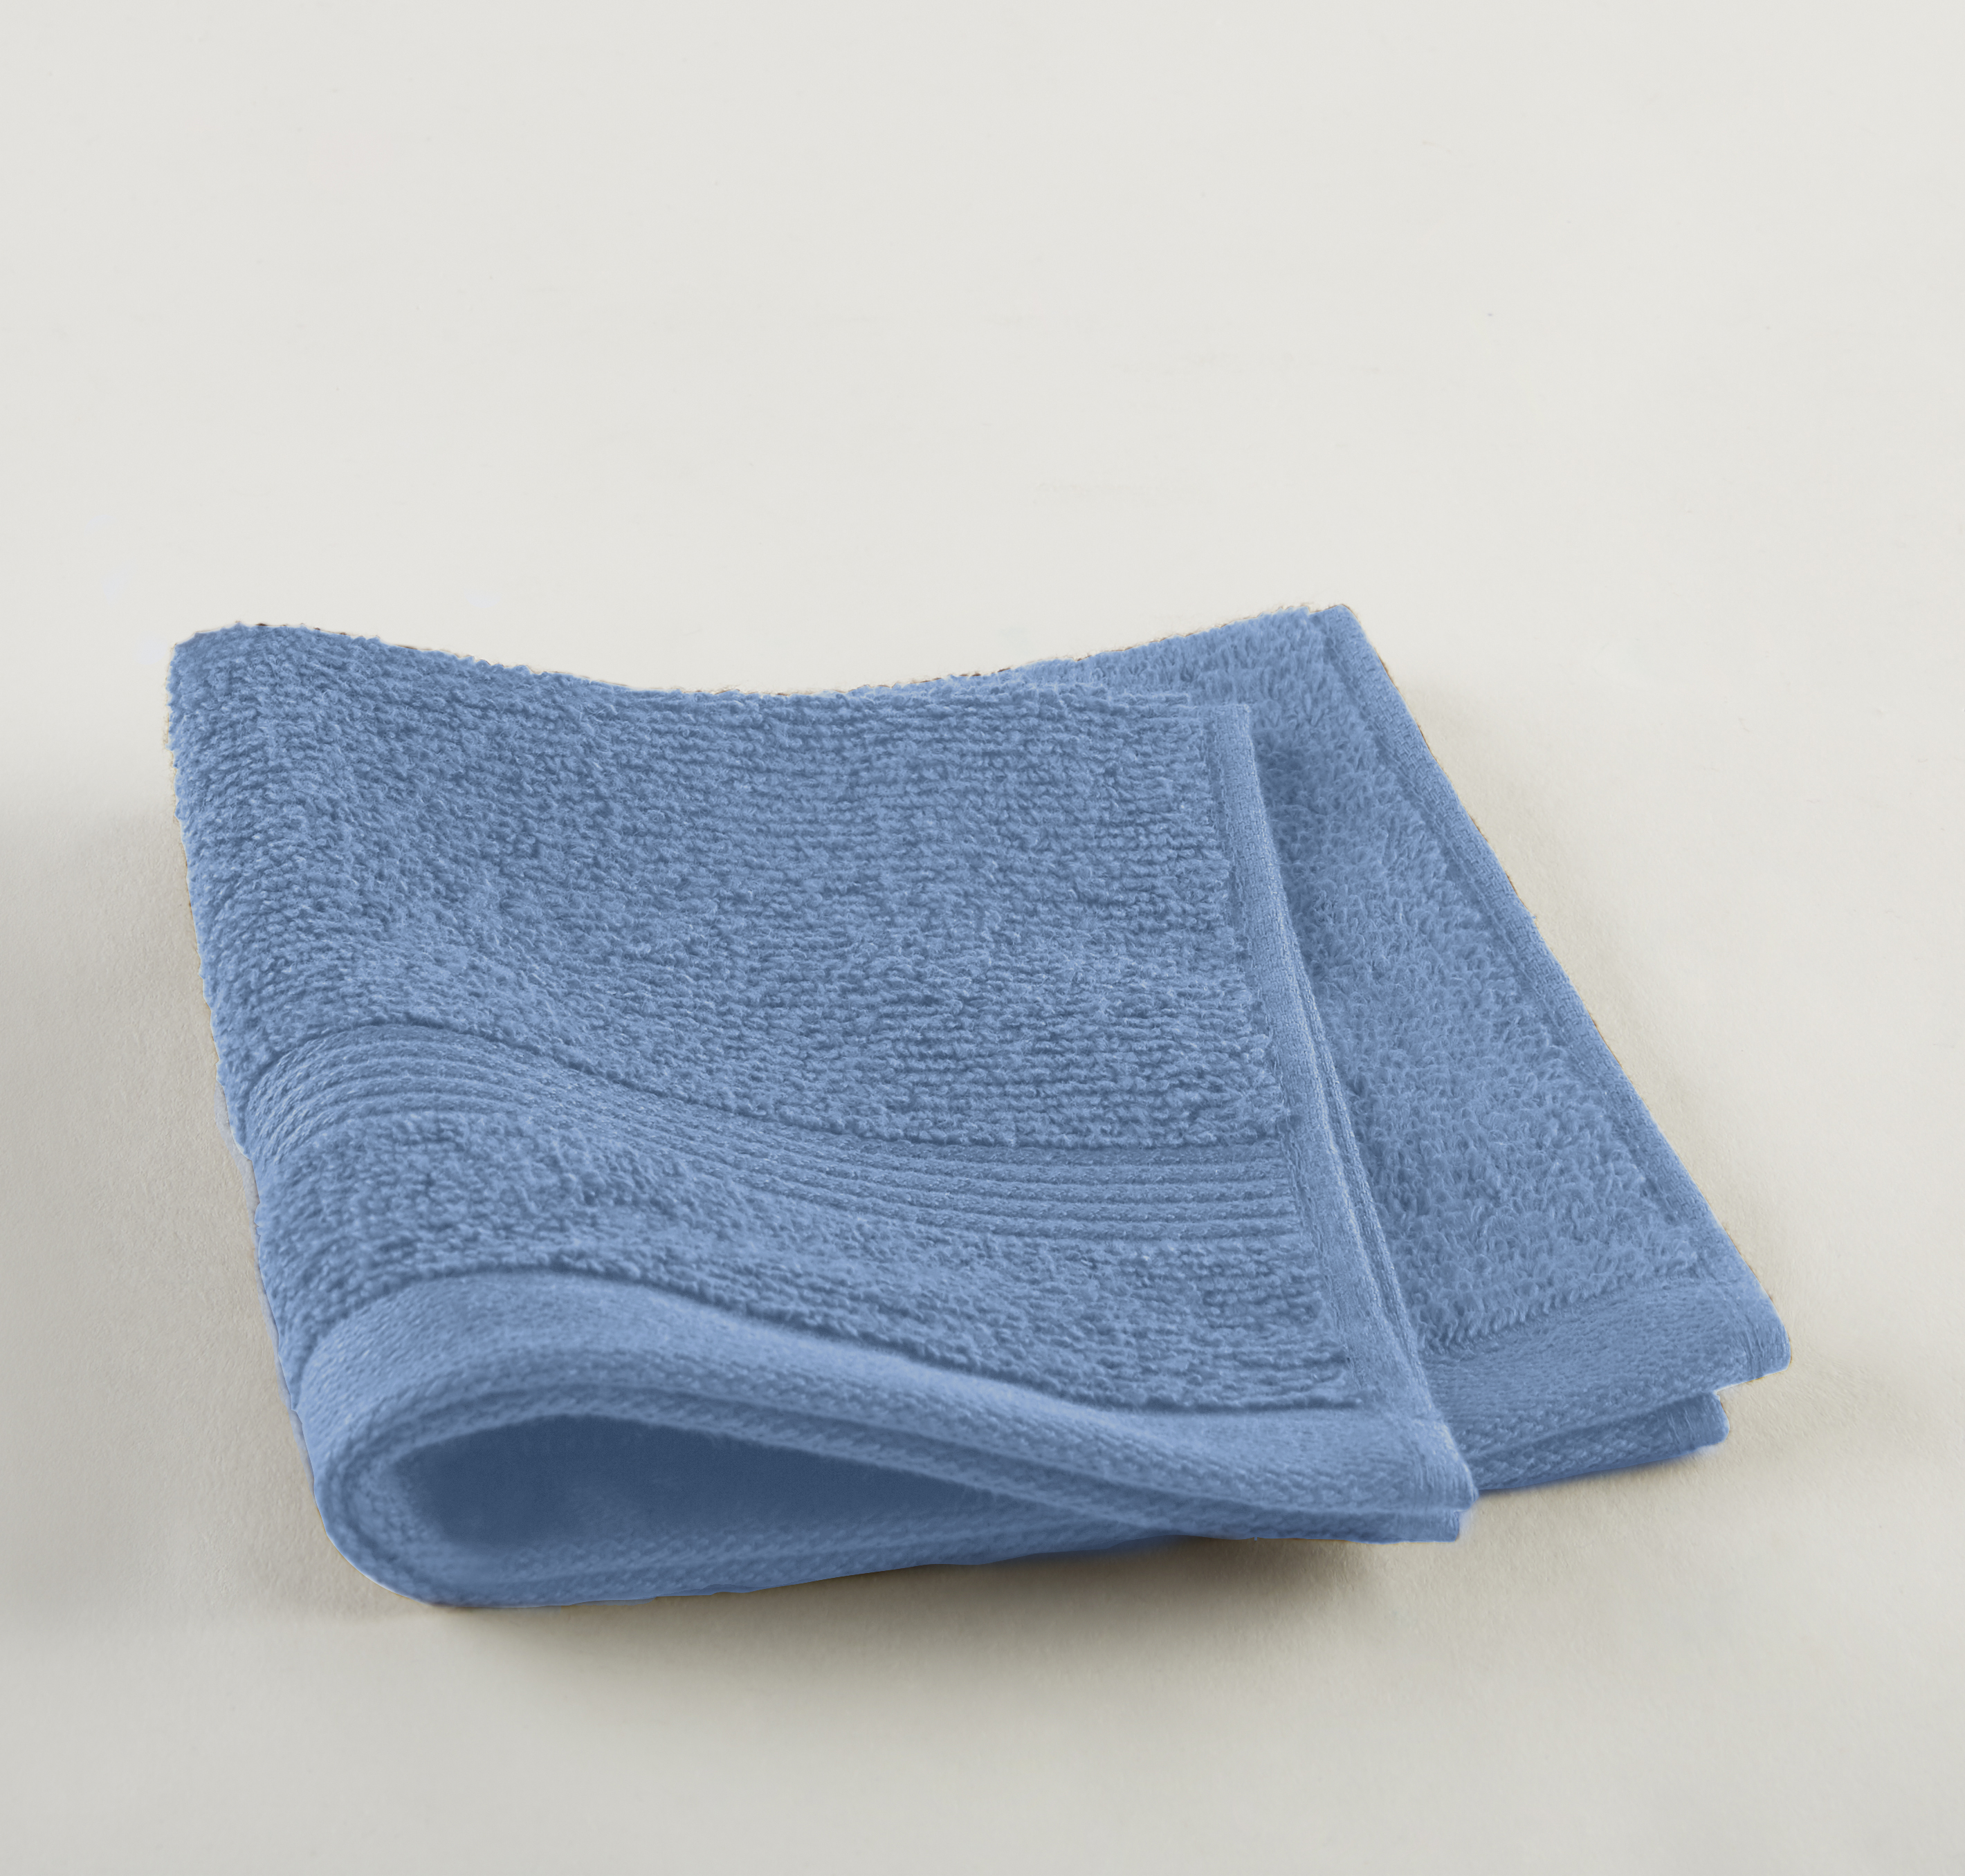 Mainstays Performance 6-Piece Towel Set, Solid Blue Linen - image 3 of 4